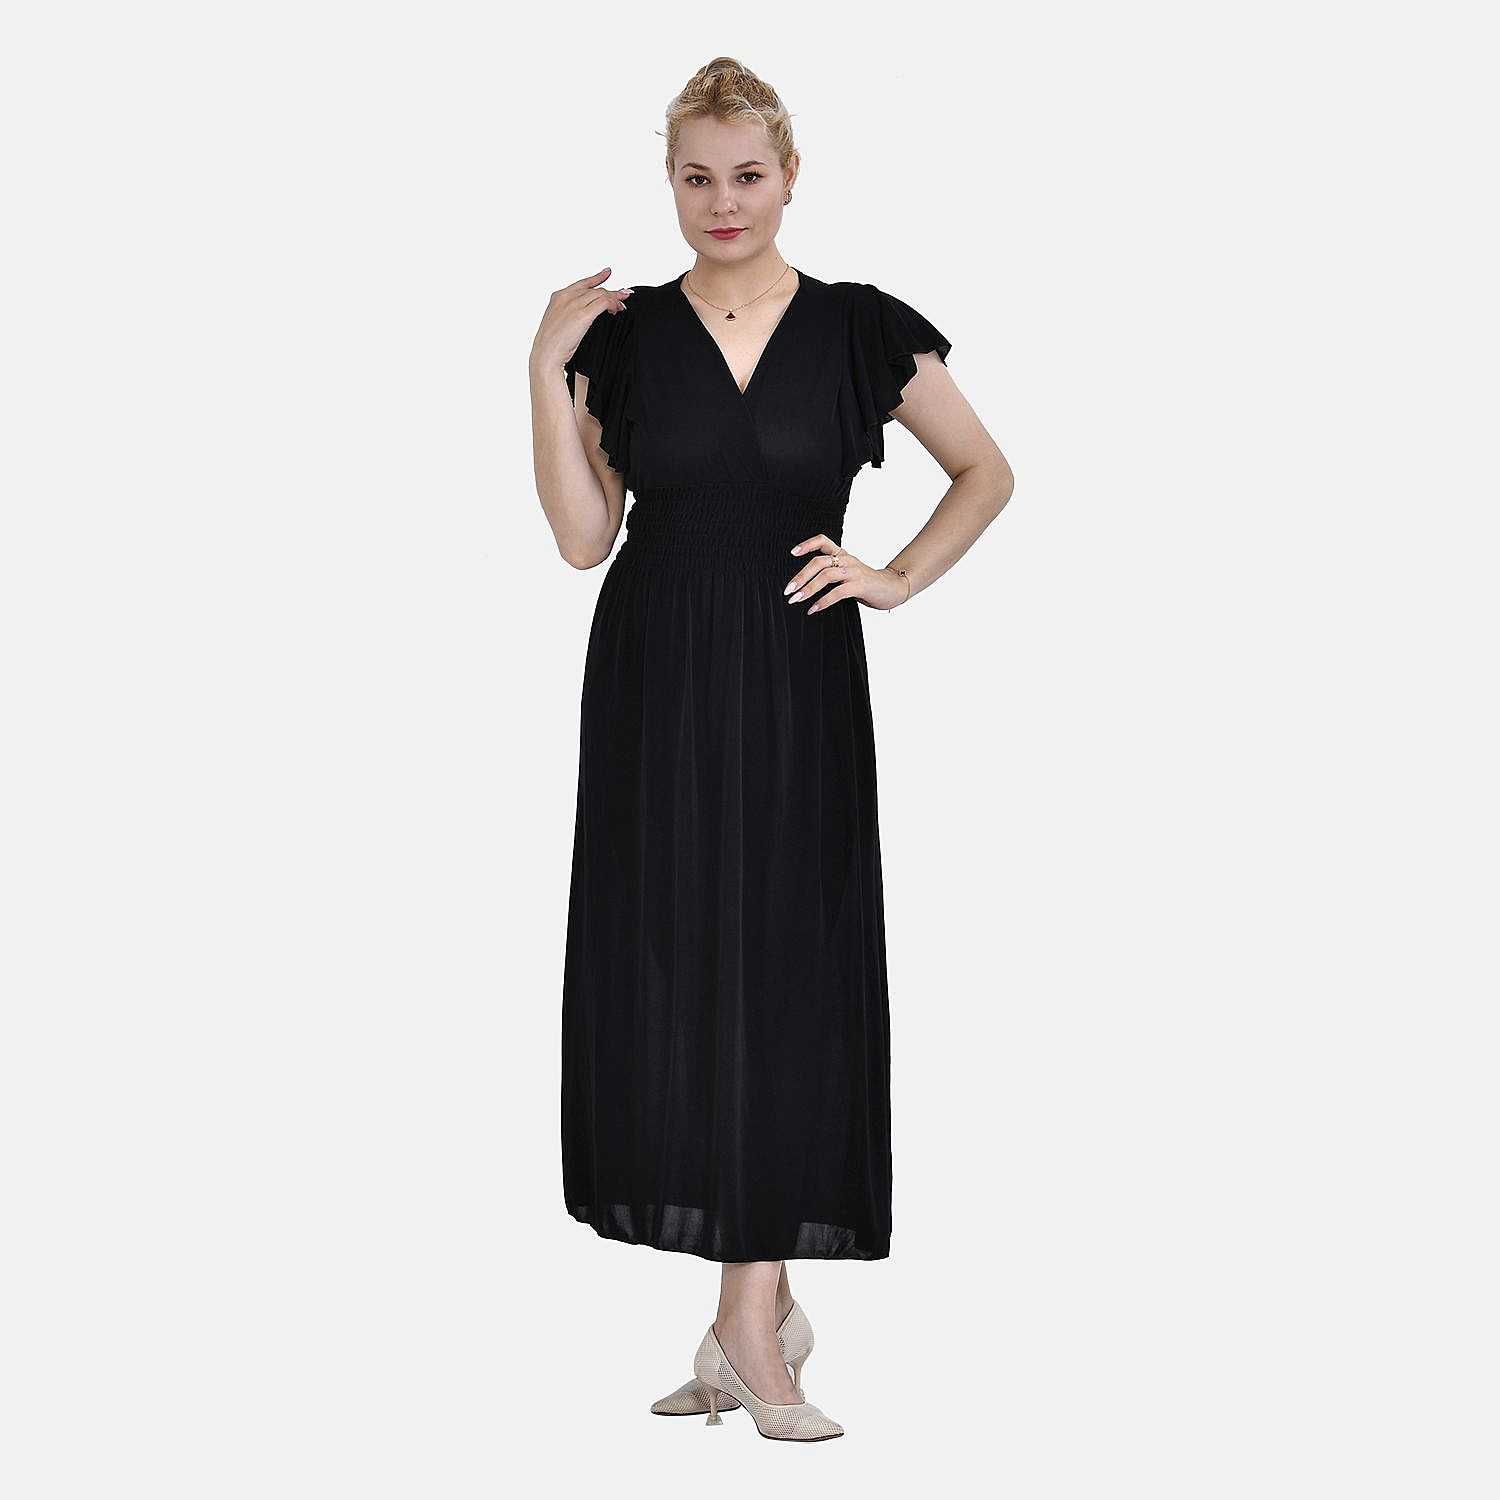 Tamsy-Polyester-Solid-Dress-Size-125x1-cm-Black-Black